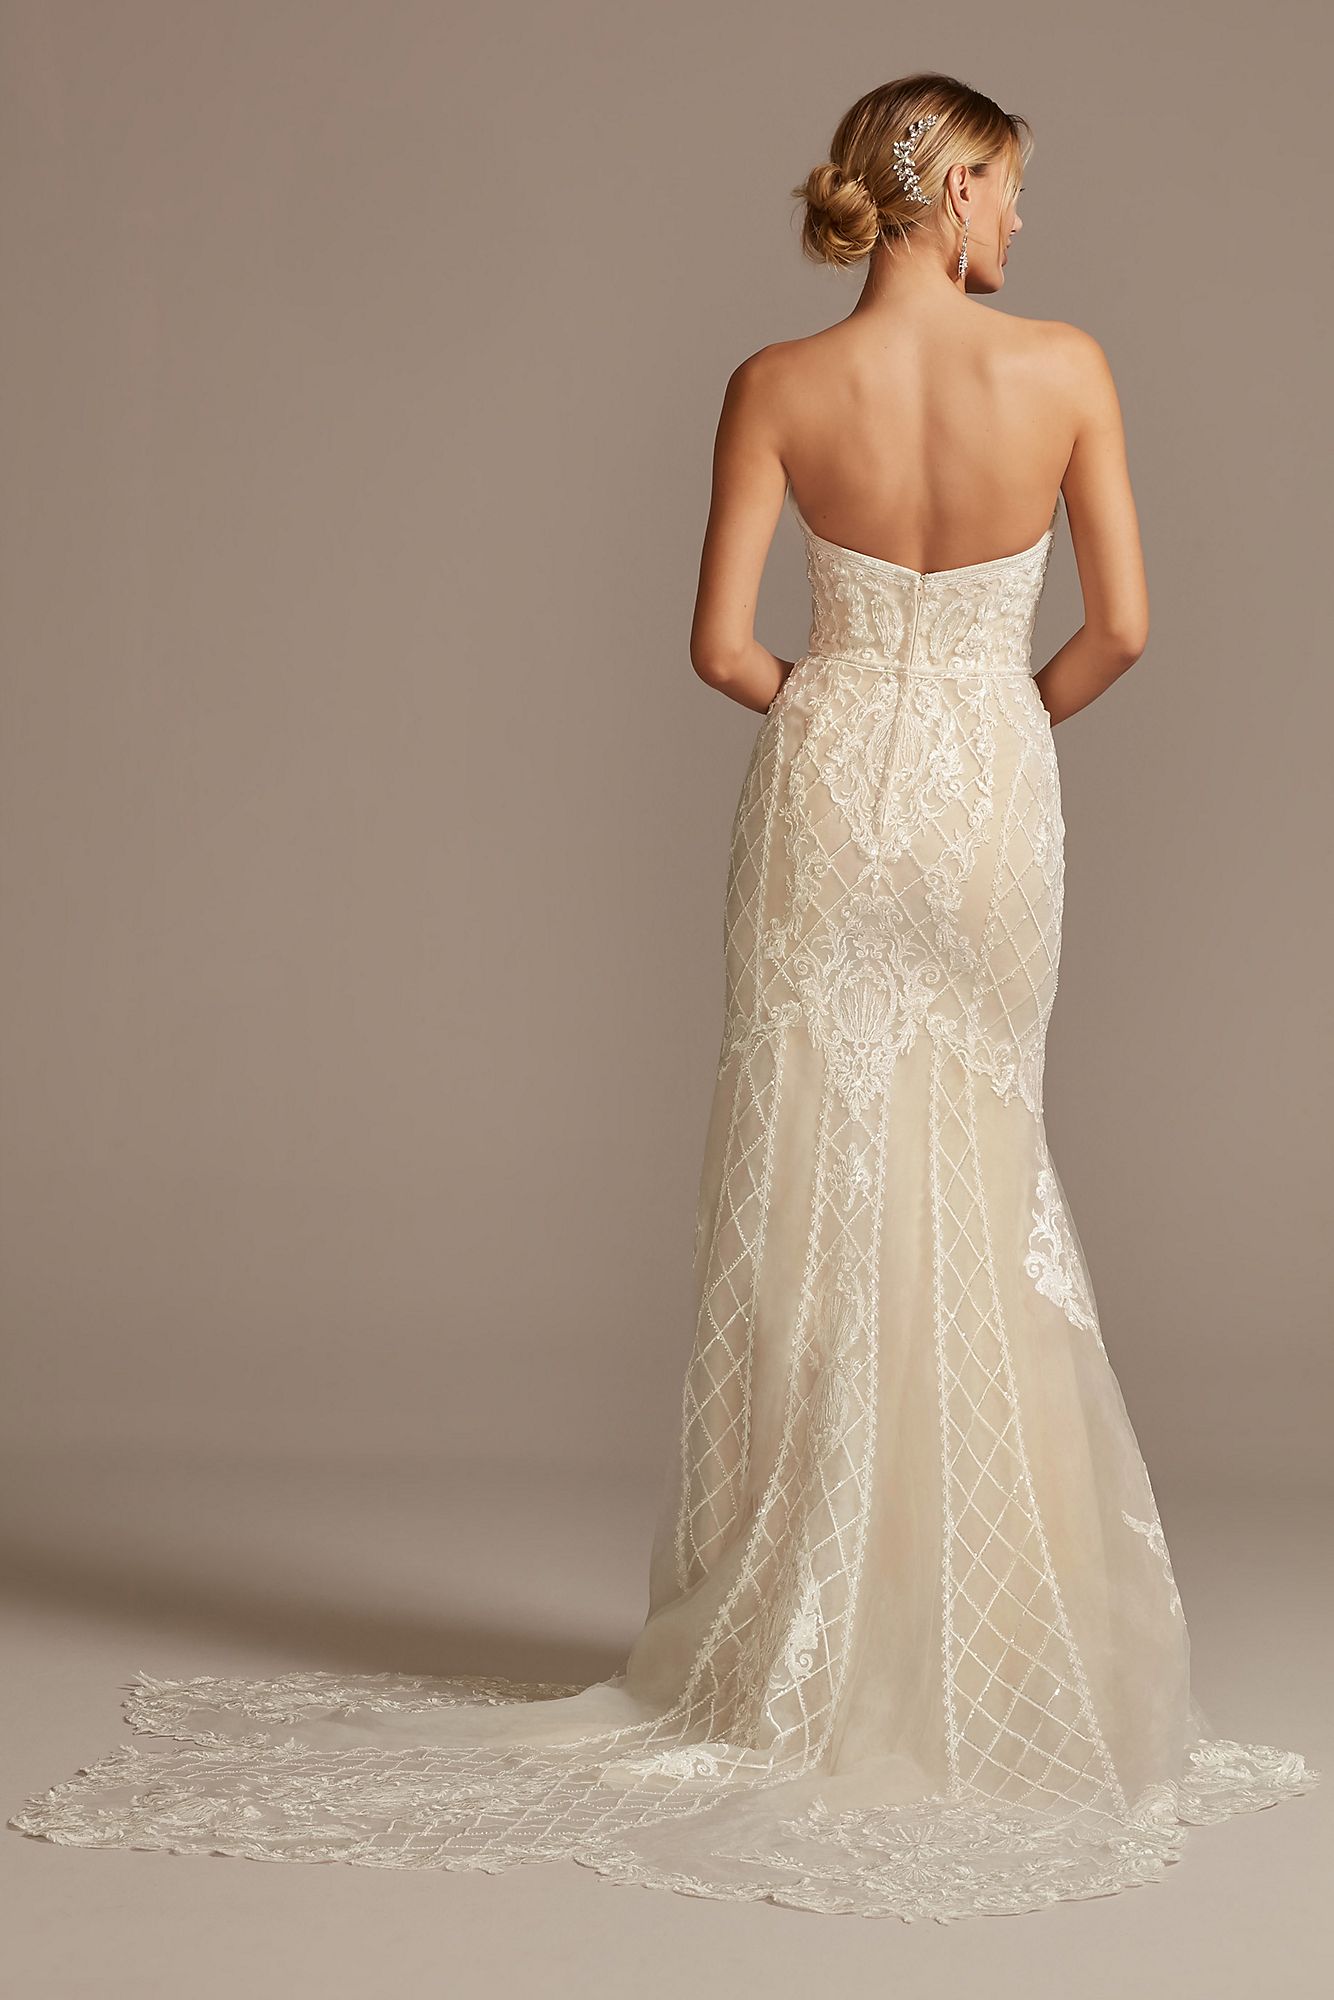 Beaded Scroll and Lace Mermaid Tall Wedding Dress 4XLCWG878